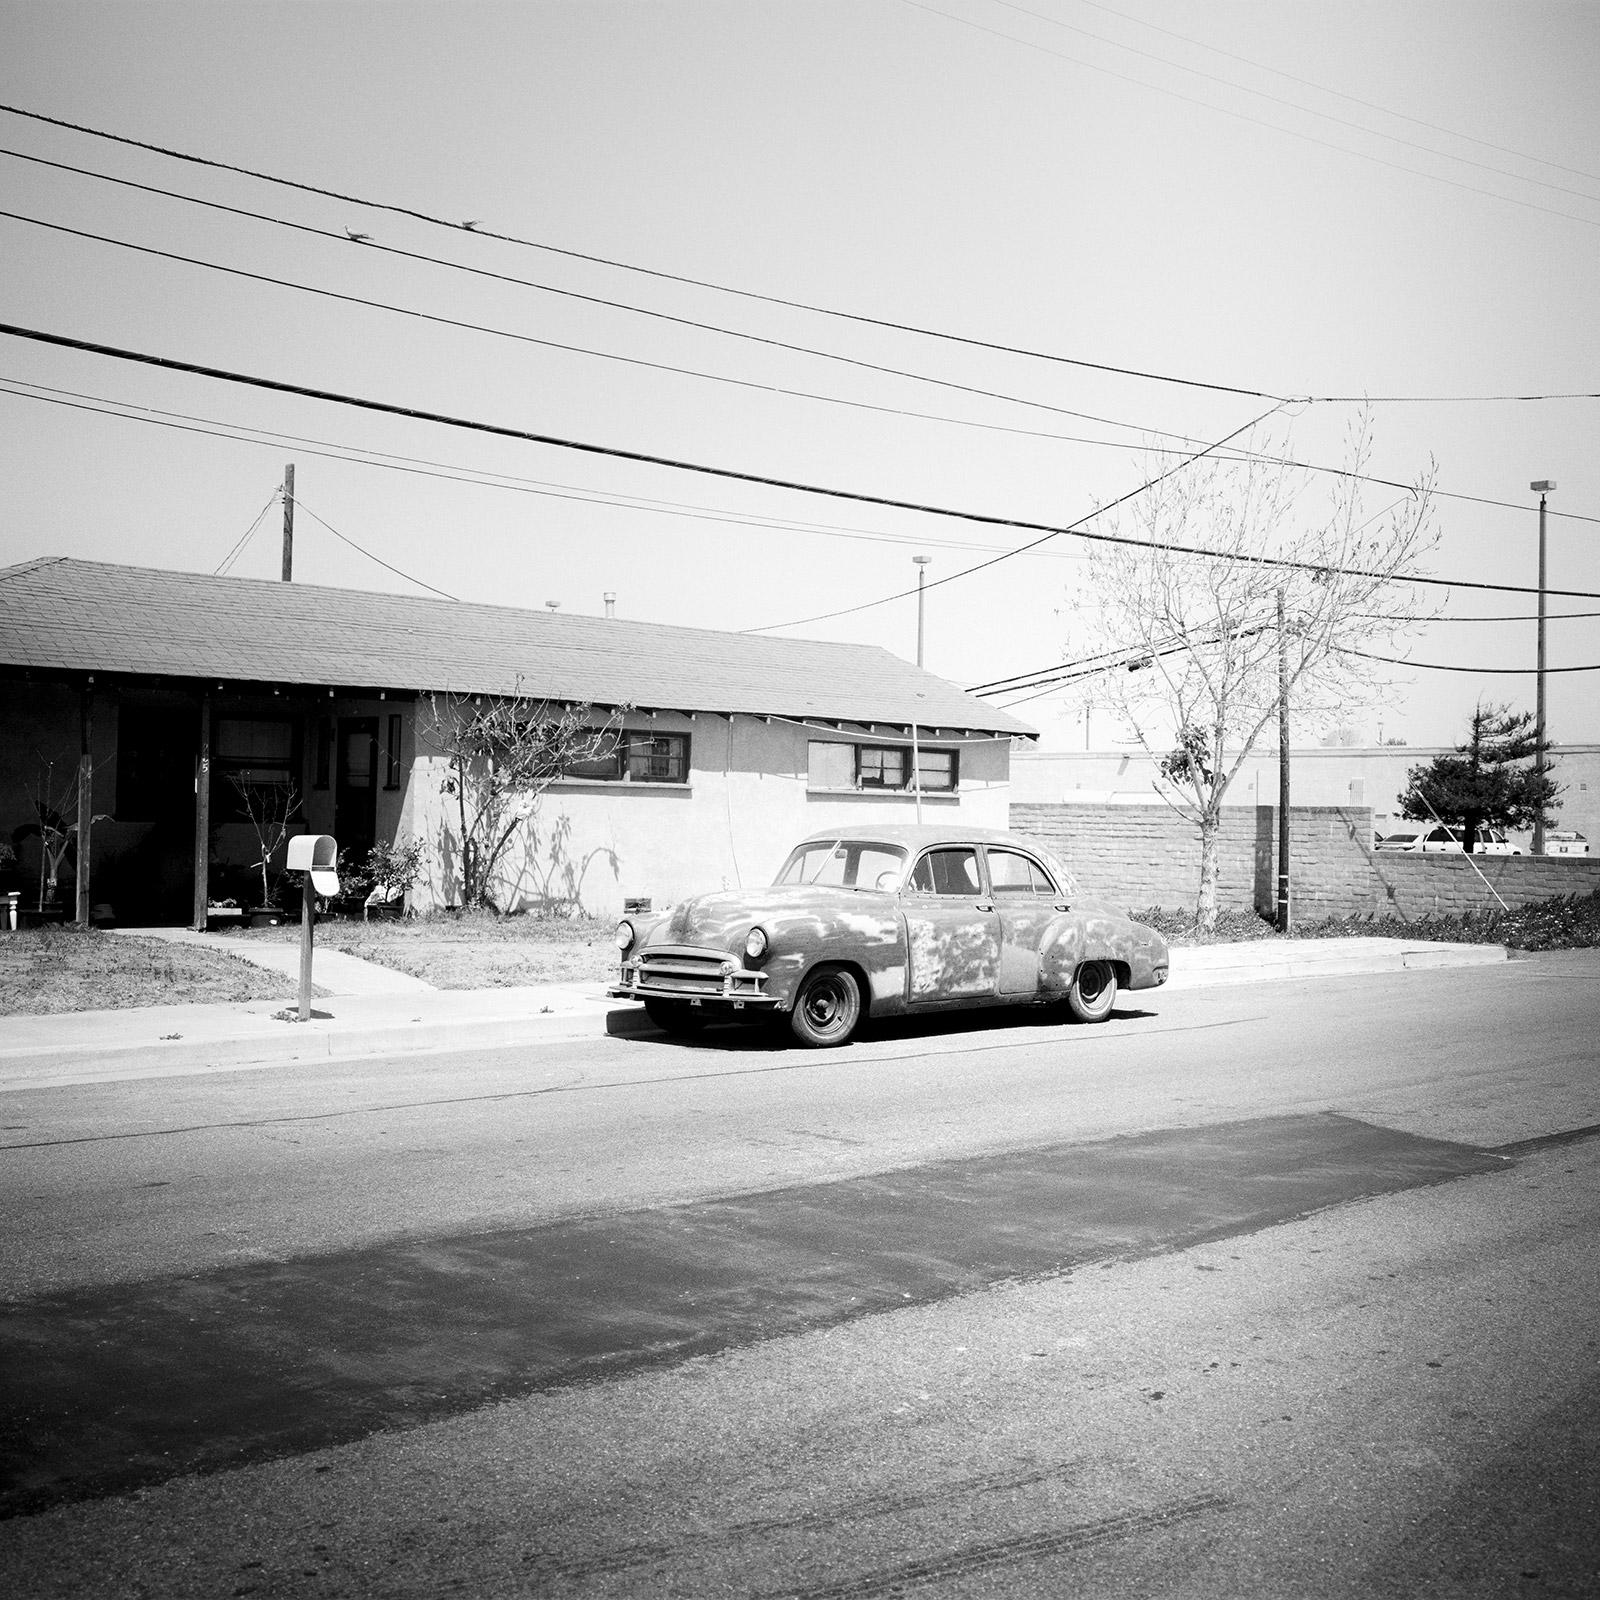 House 285, Old Car, Arizona, USA, black and white photography, landscape